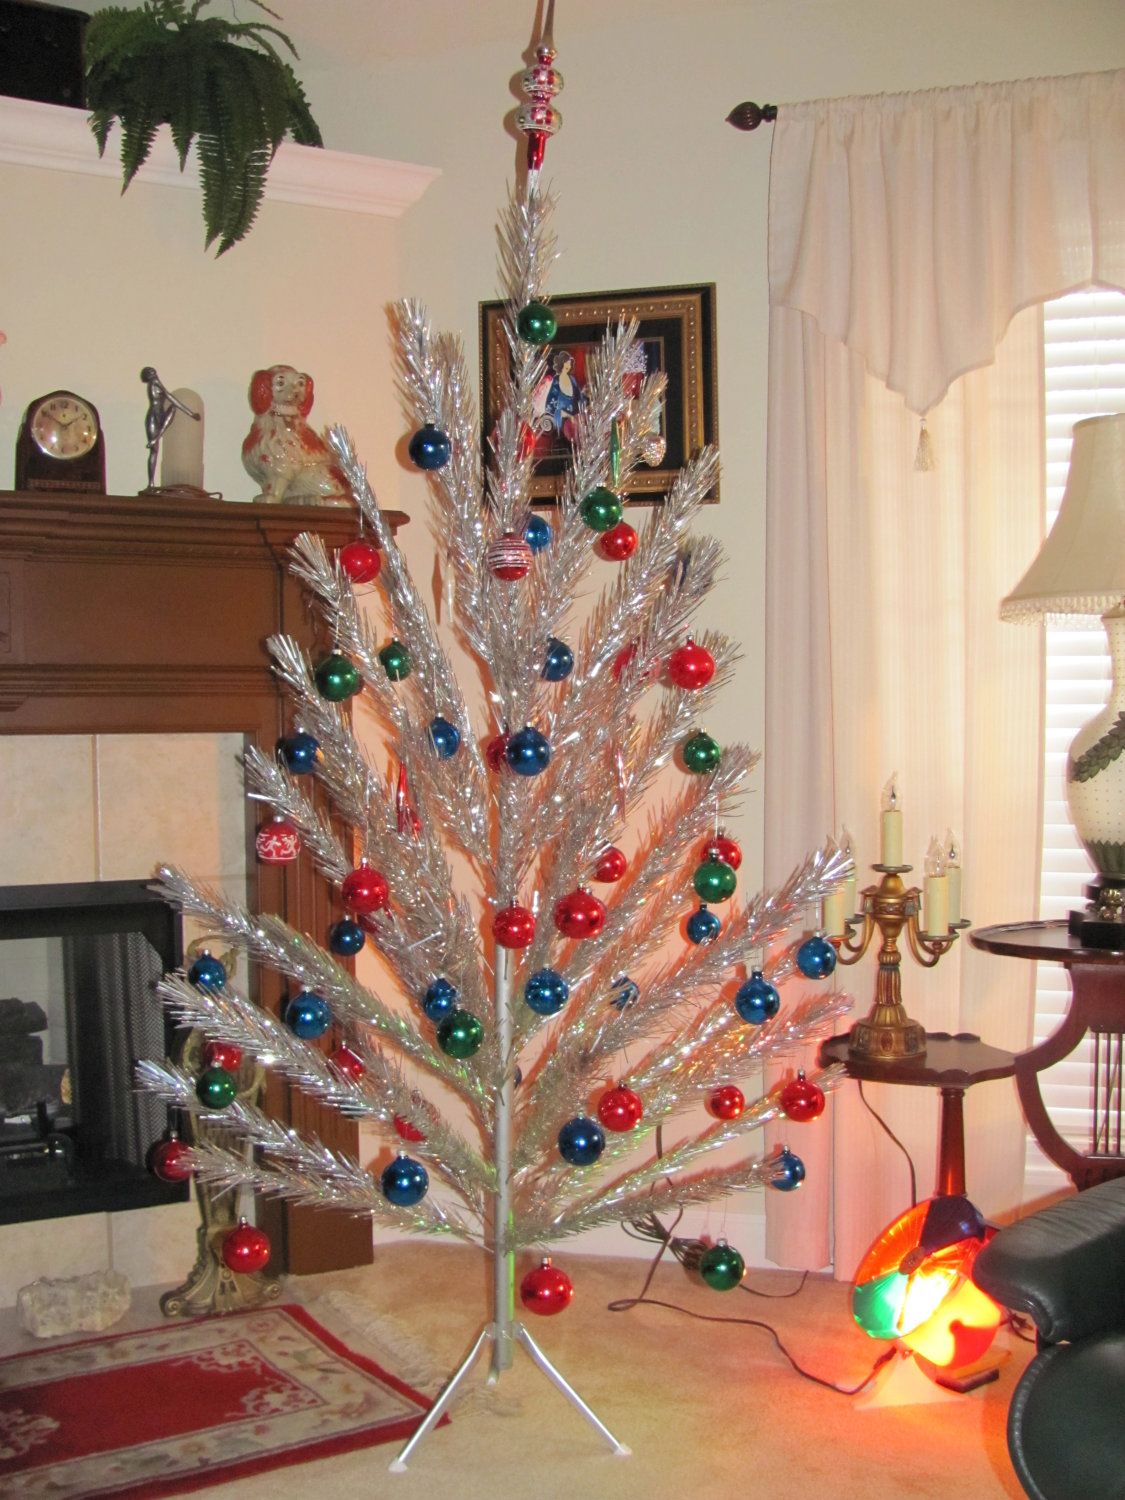 RETRO KIMMER'S BLOG: 19 ALUMINUM VINTAGE CHRISTMAS TREES PART 2!